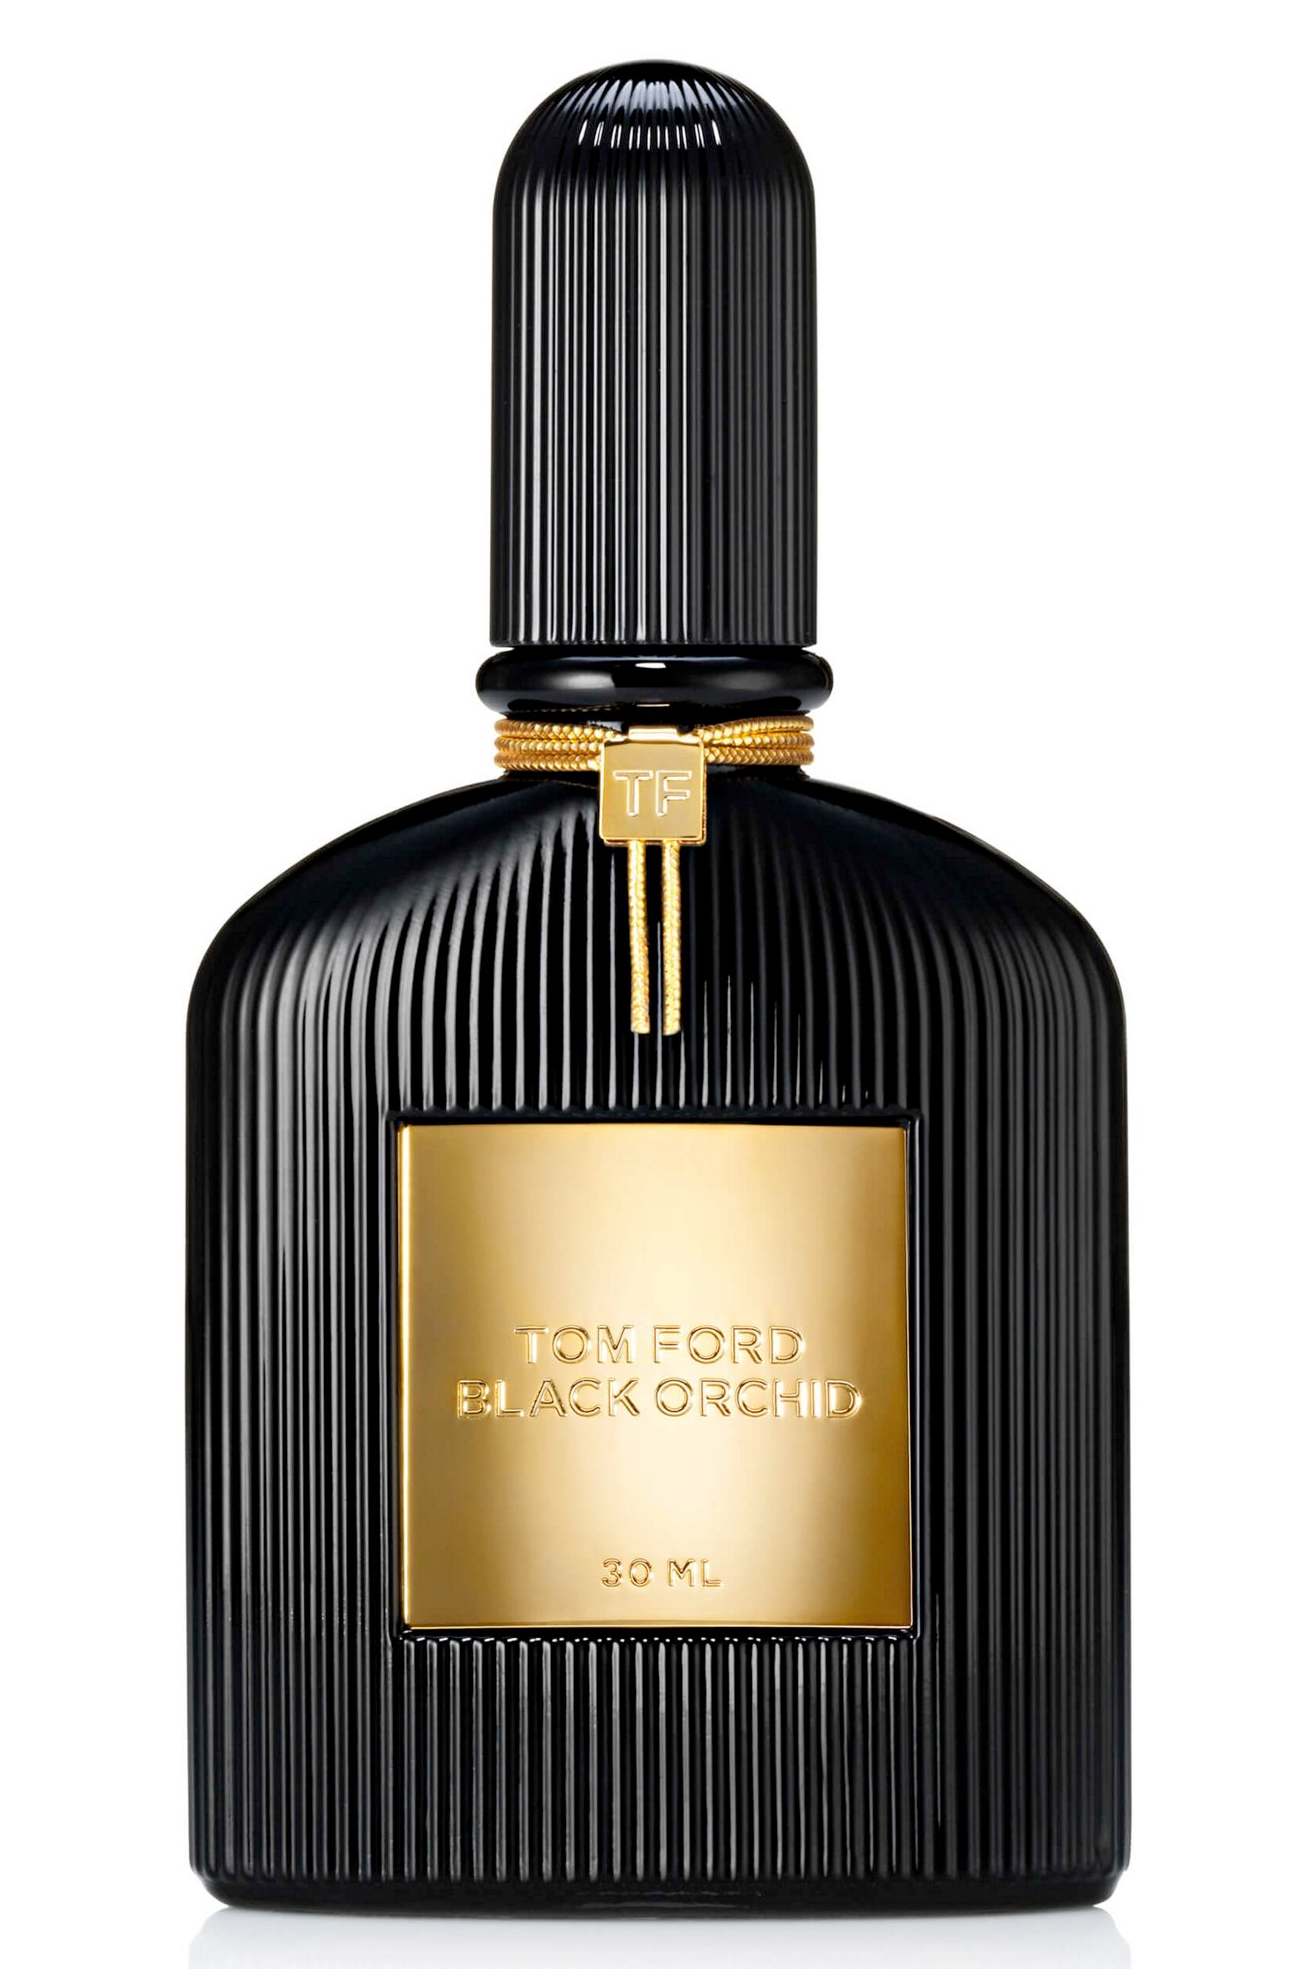 Black Orchid Oud Tom Ford perfumy - to perfumy dla kobiet 2012